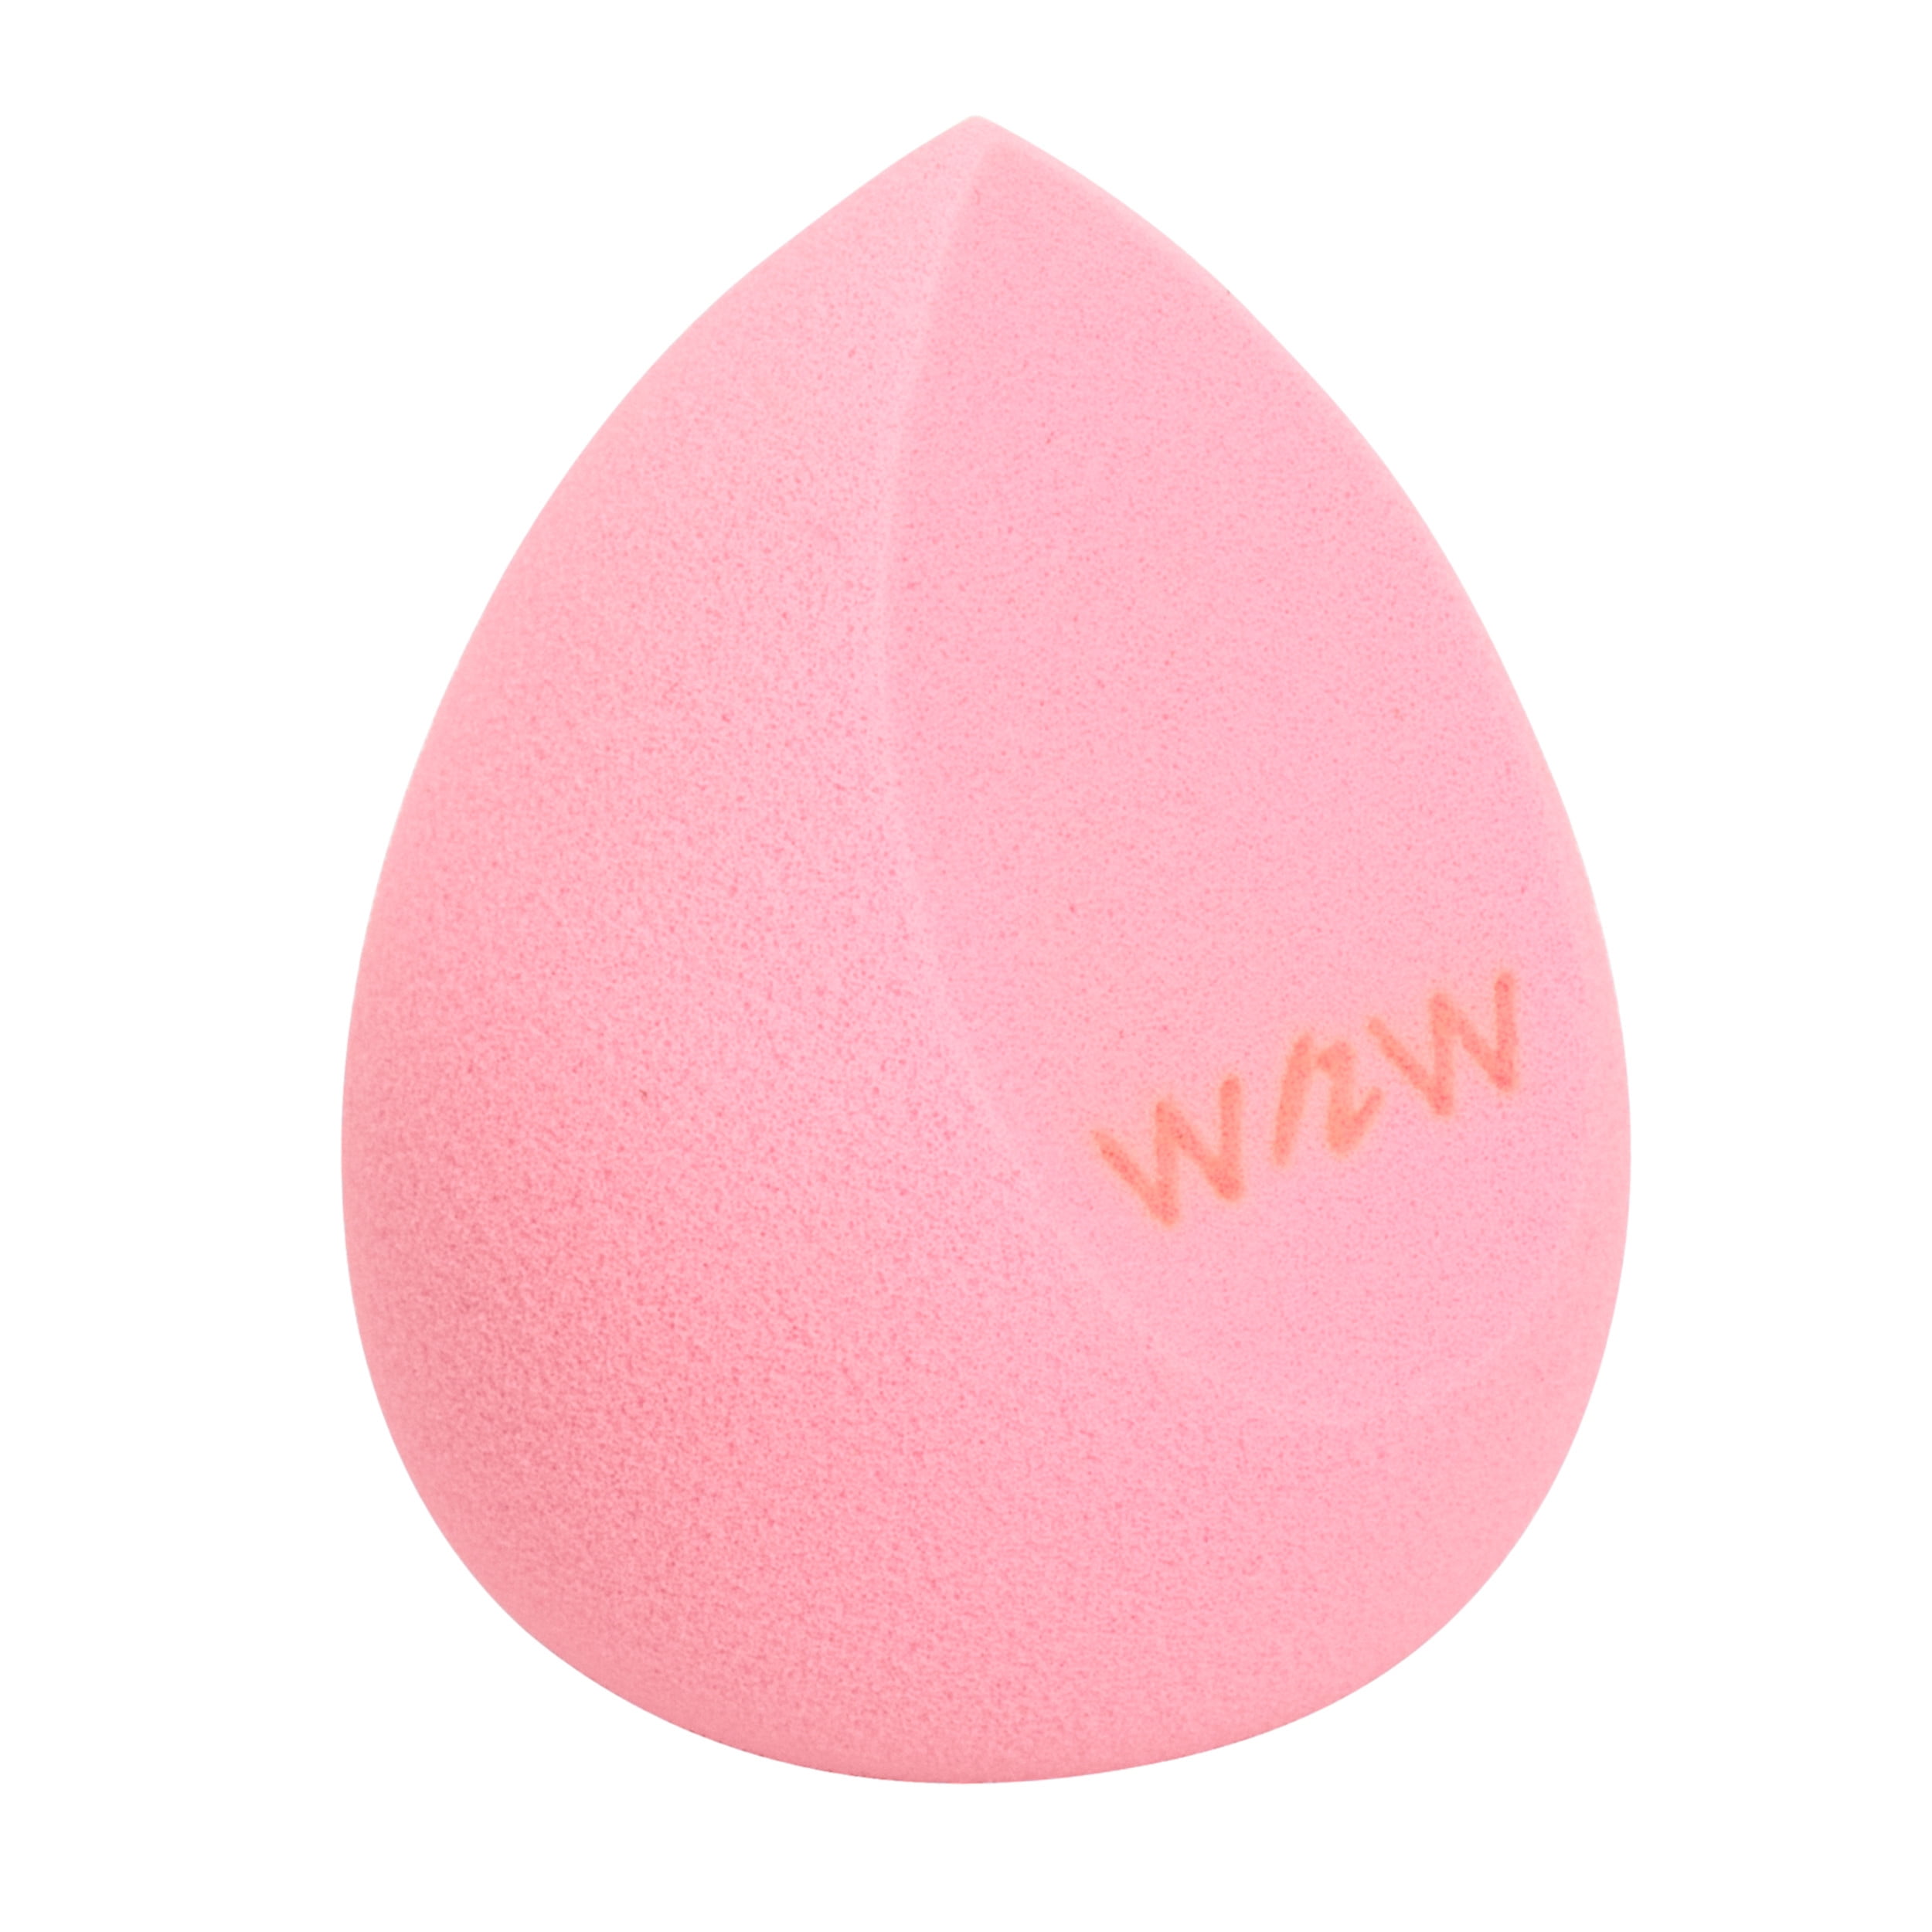 Wet N Wild, Microfiber Makeup Sponge, Pink